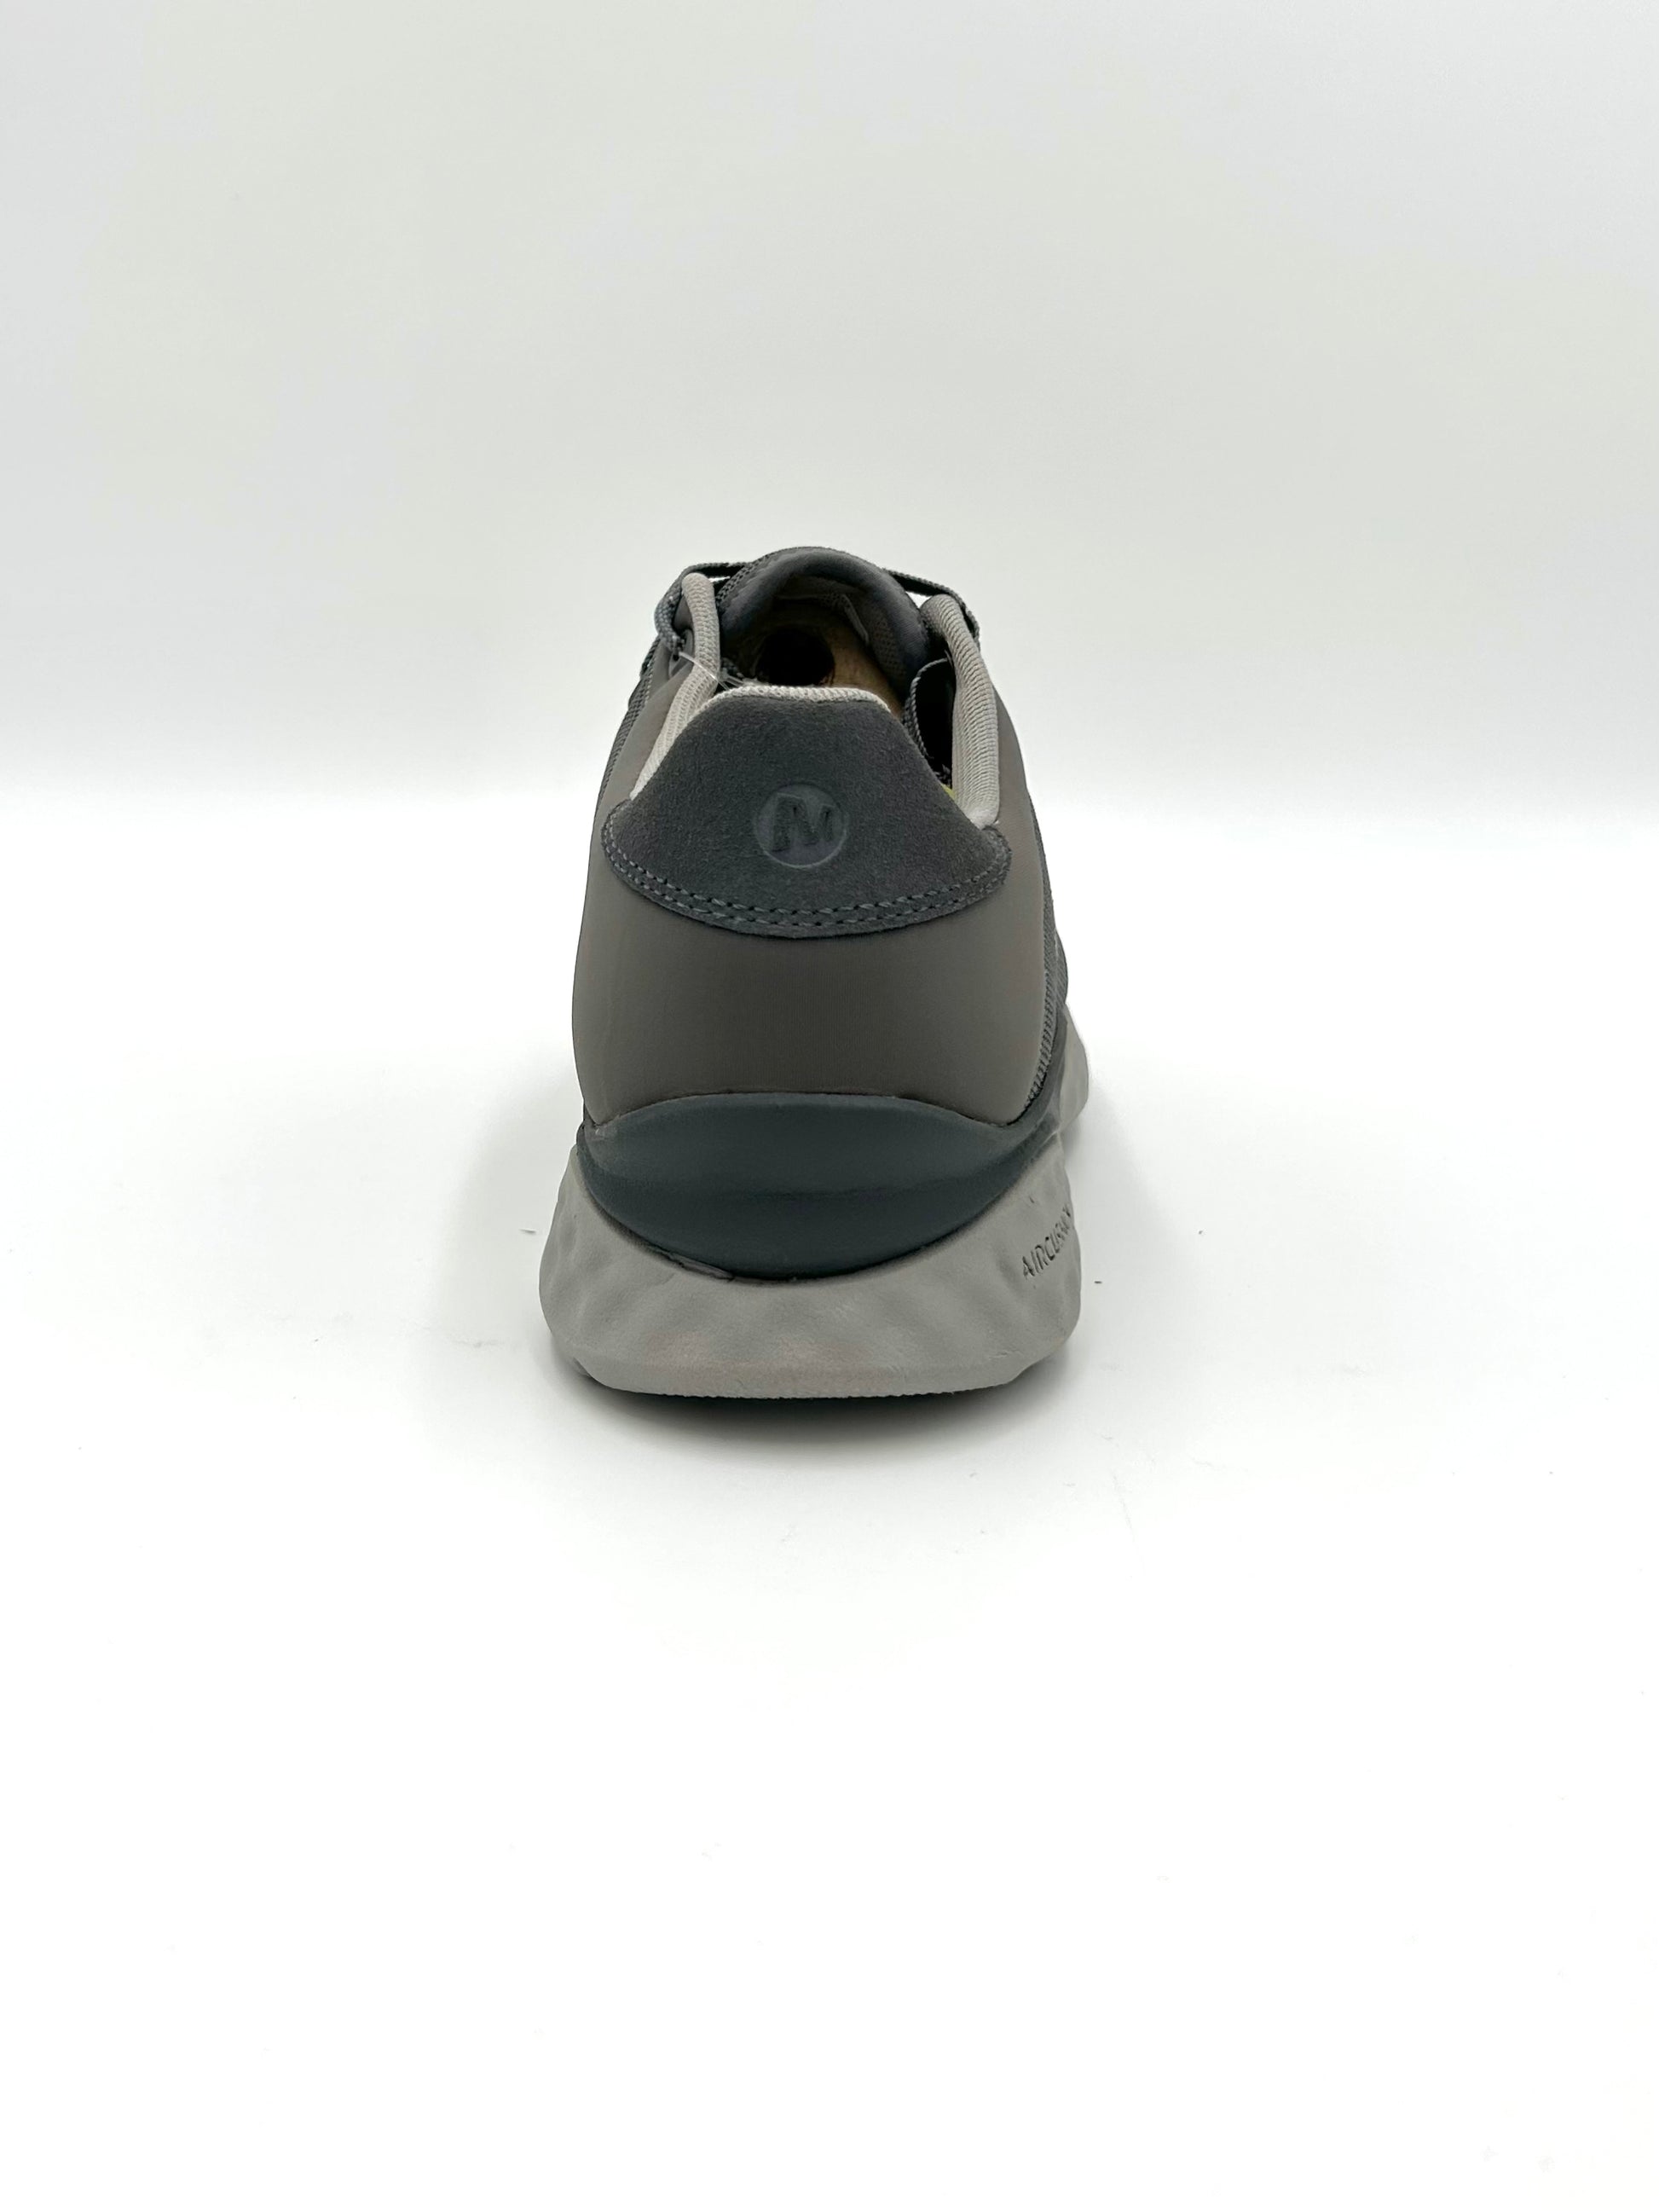 Merrell Sneakers training aircushion - grey - Merrell